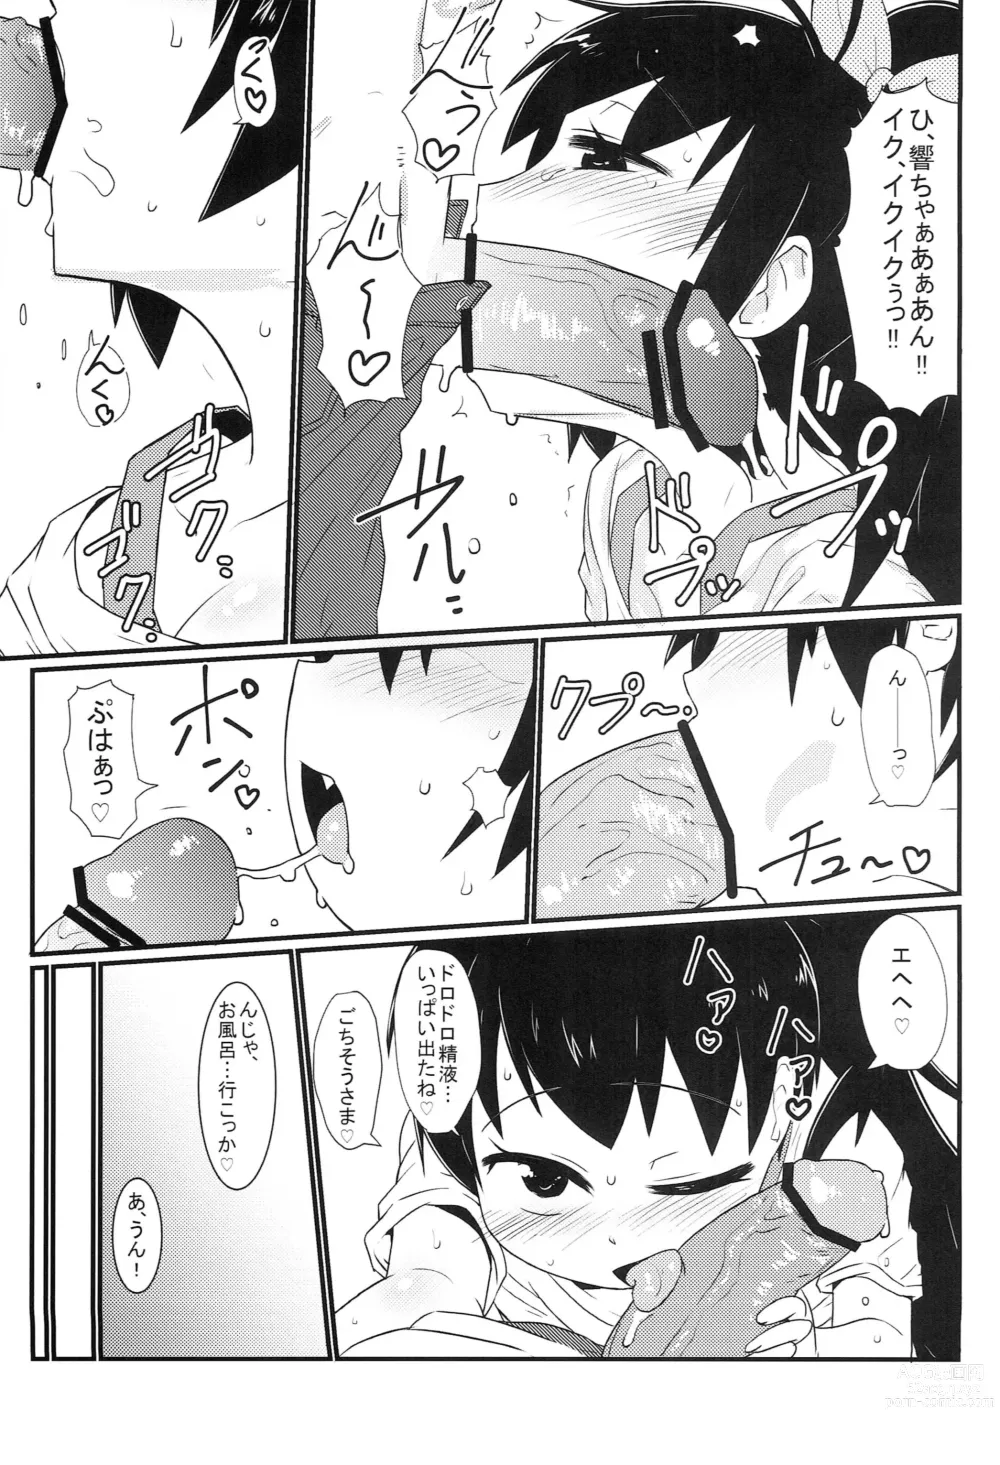 Page 4 of doujinshi Delivery Hibiki